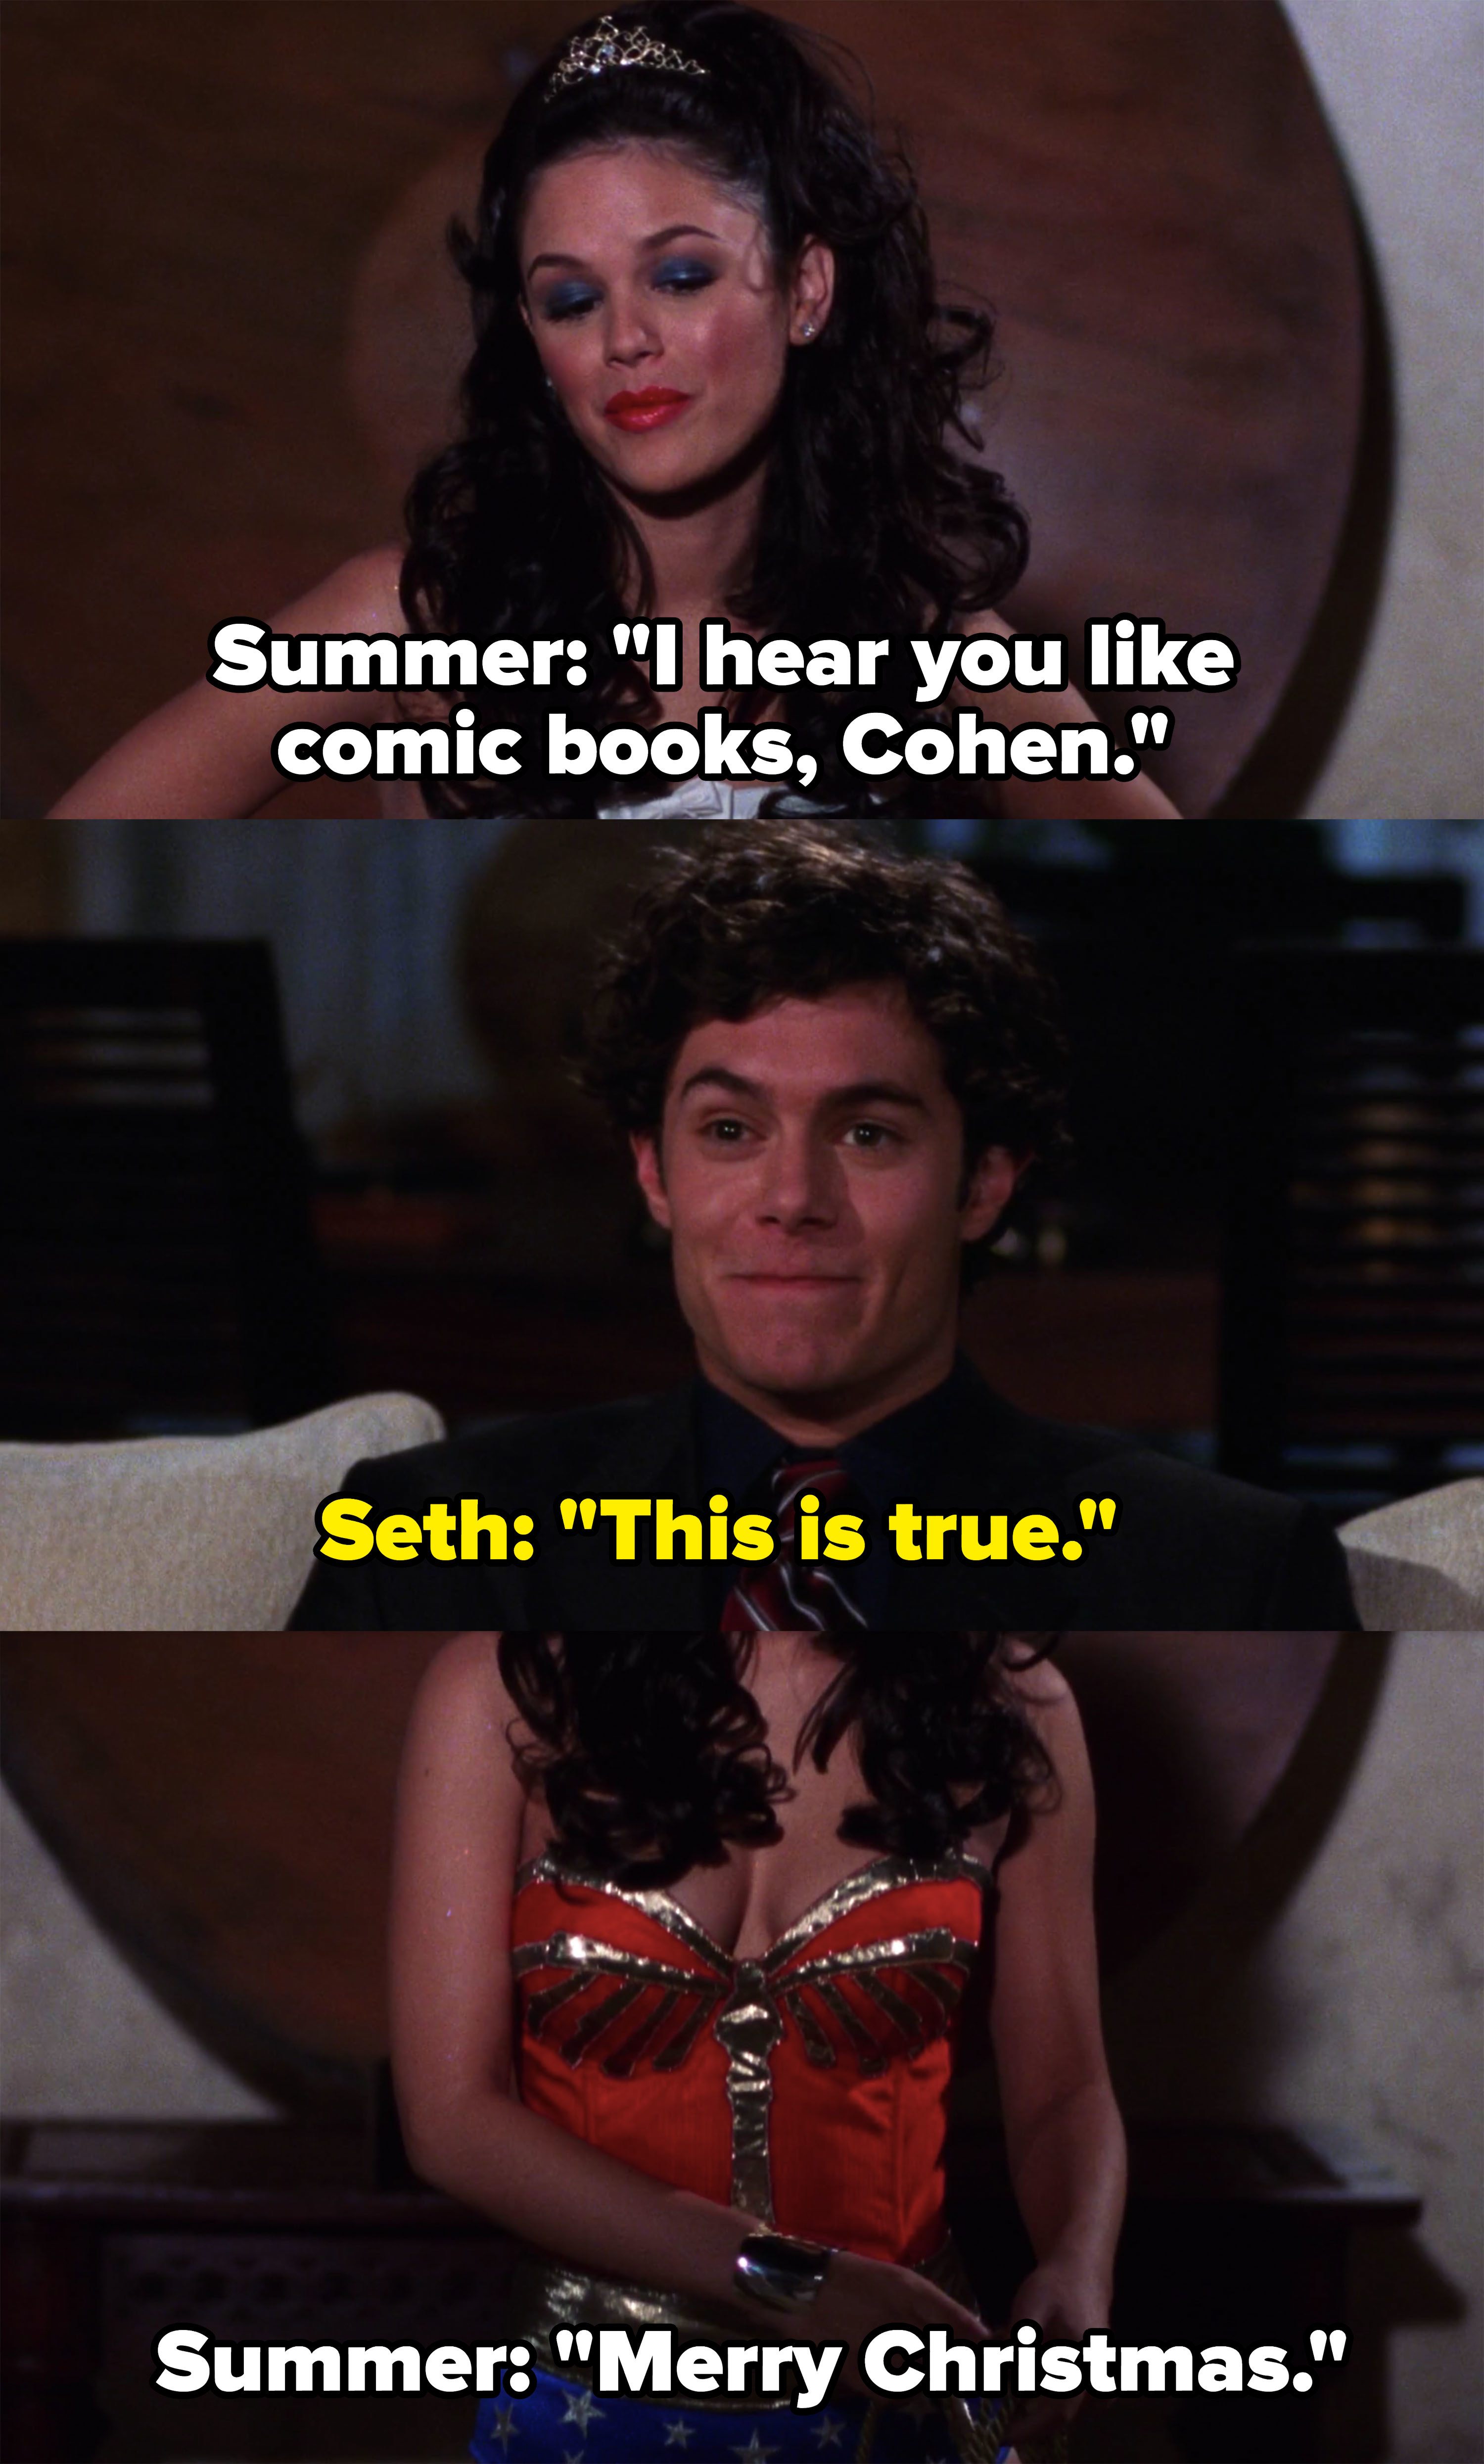 Summer strips down into Wonder Woman suit, &quot;I hear you like comic books Cohen&quot;